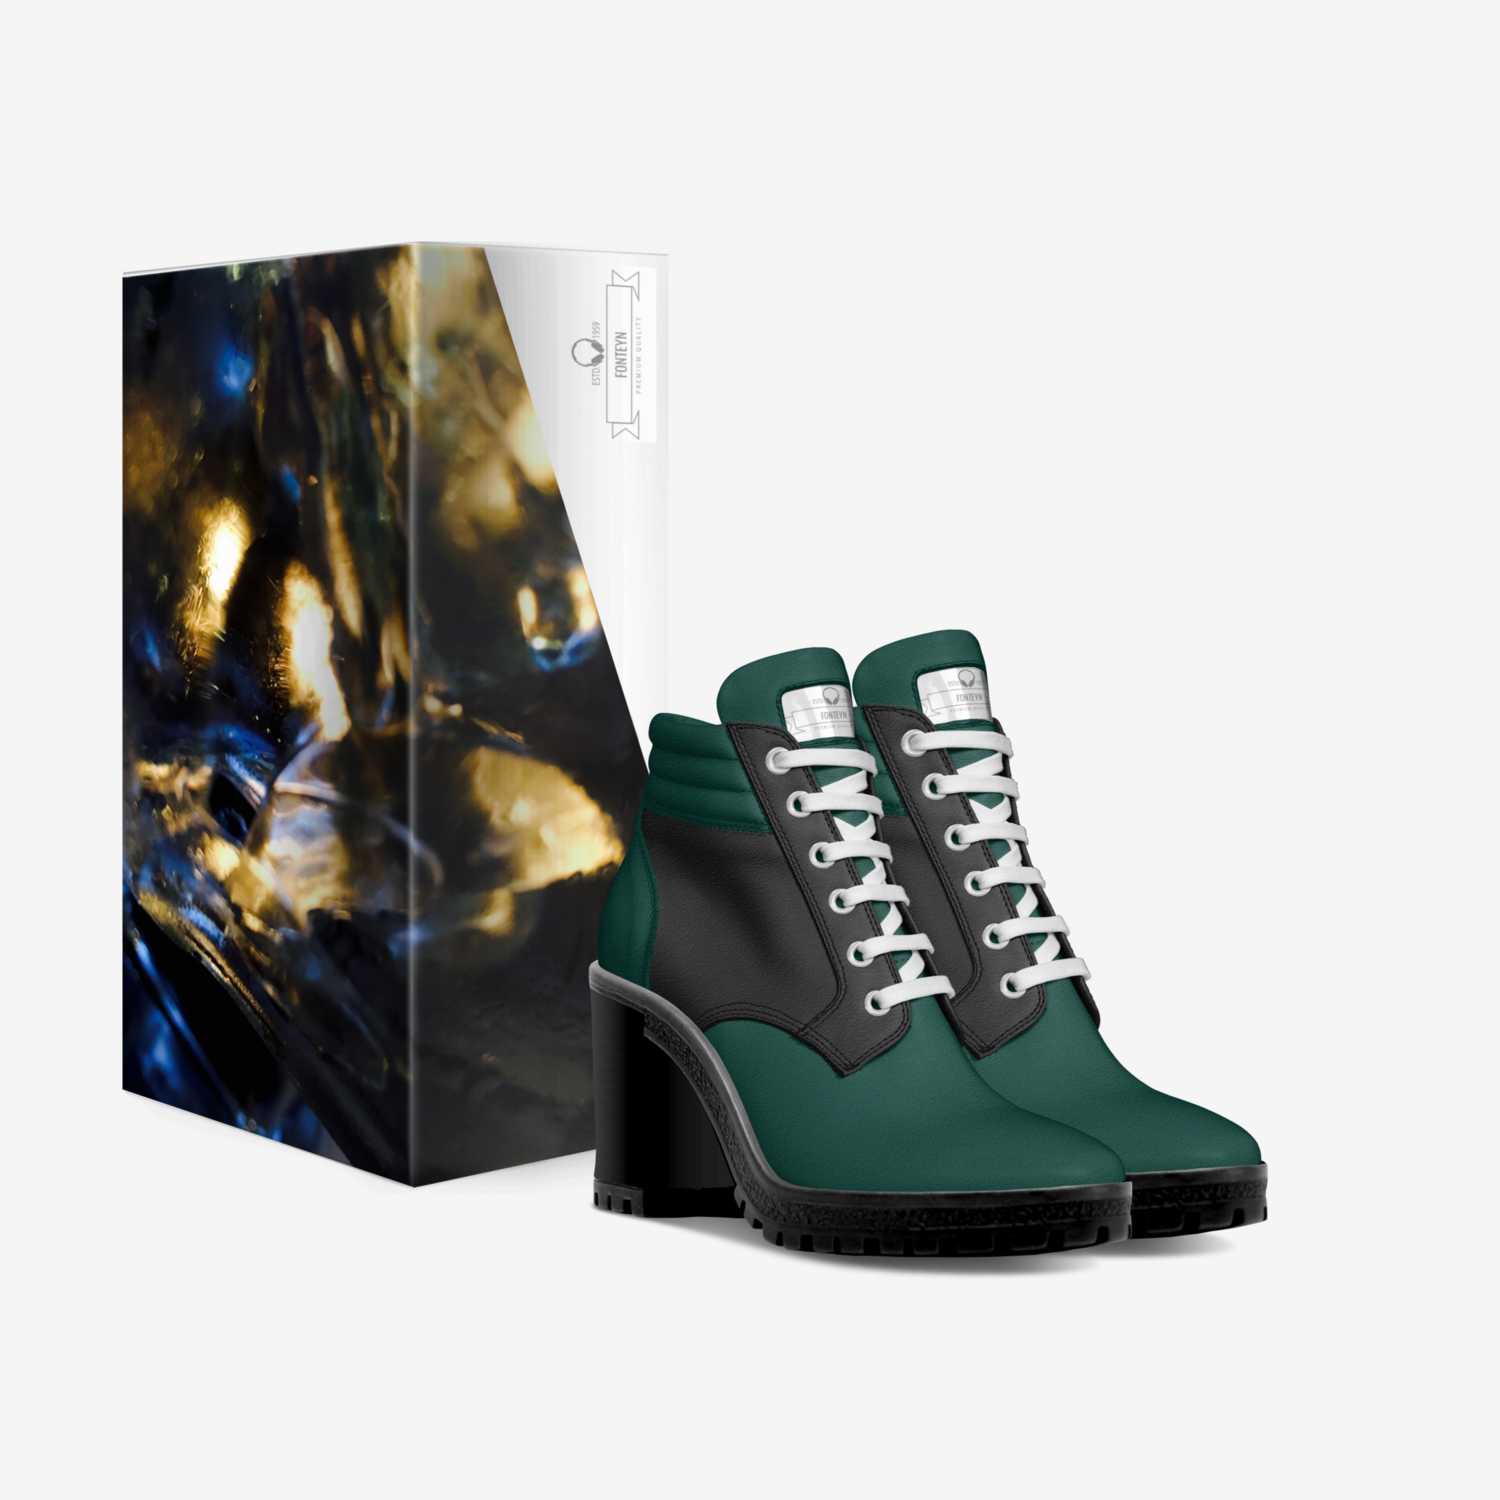 Fonteyn custom made in Italy shoes by Liv Fonteyn | Box view